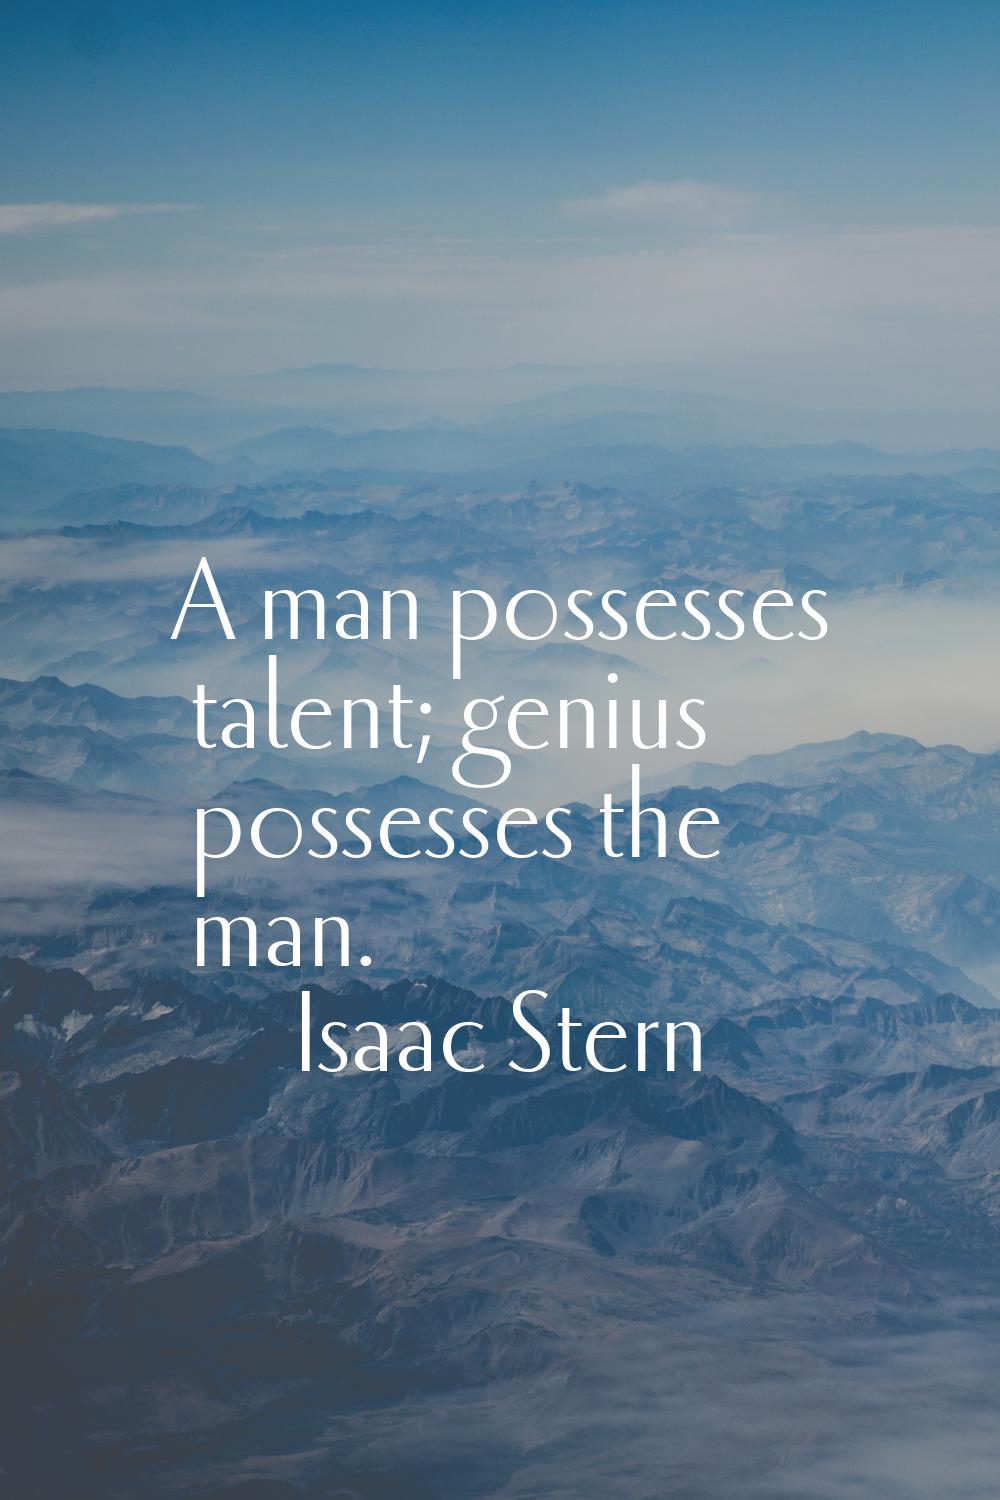 A man possesses talent; genius possesses the man.